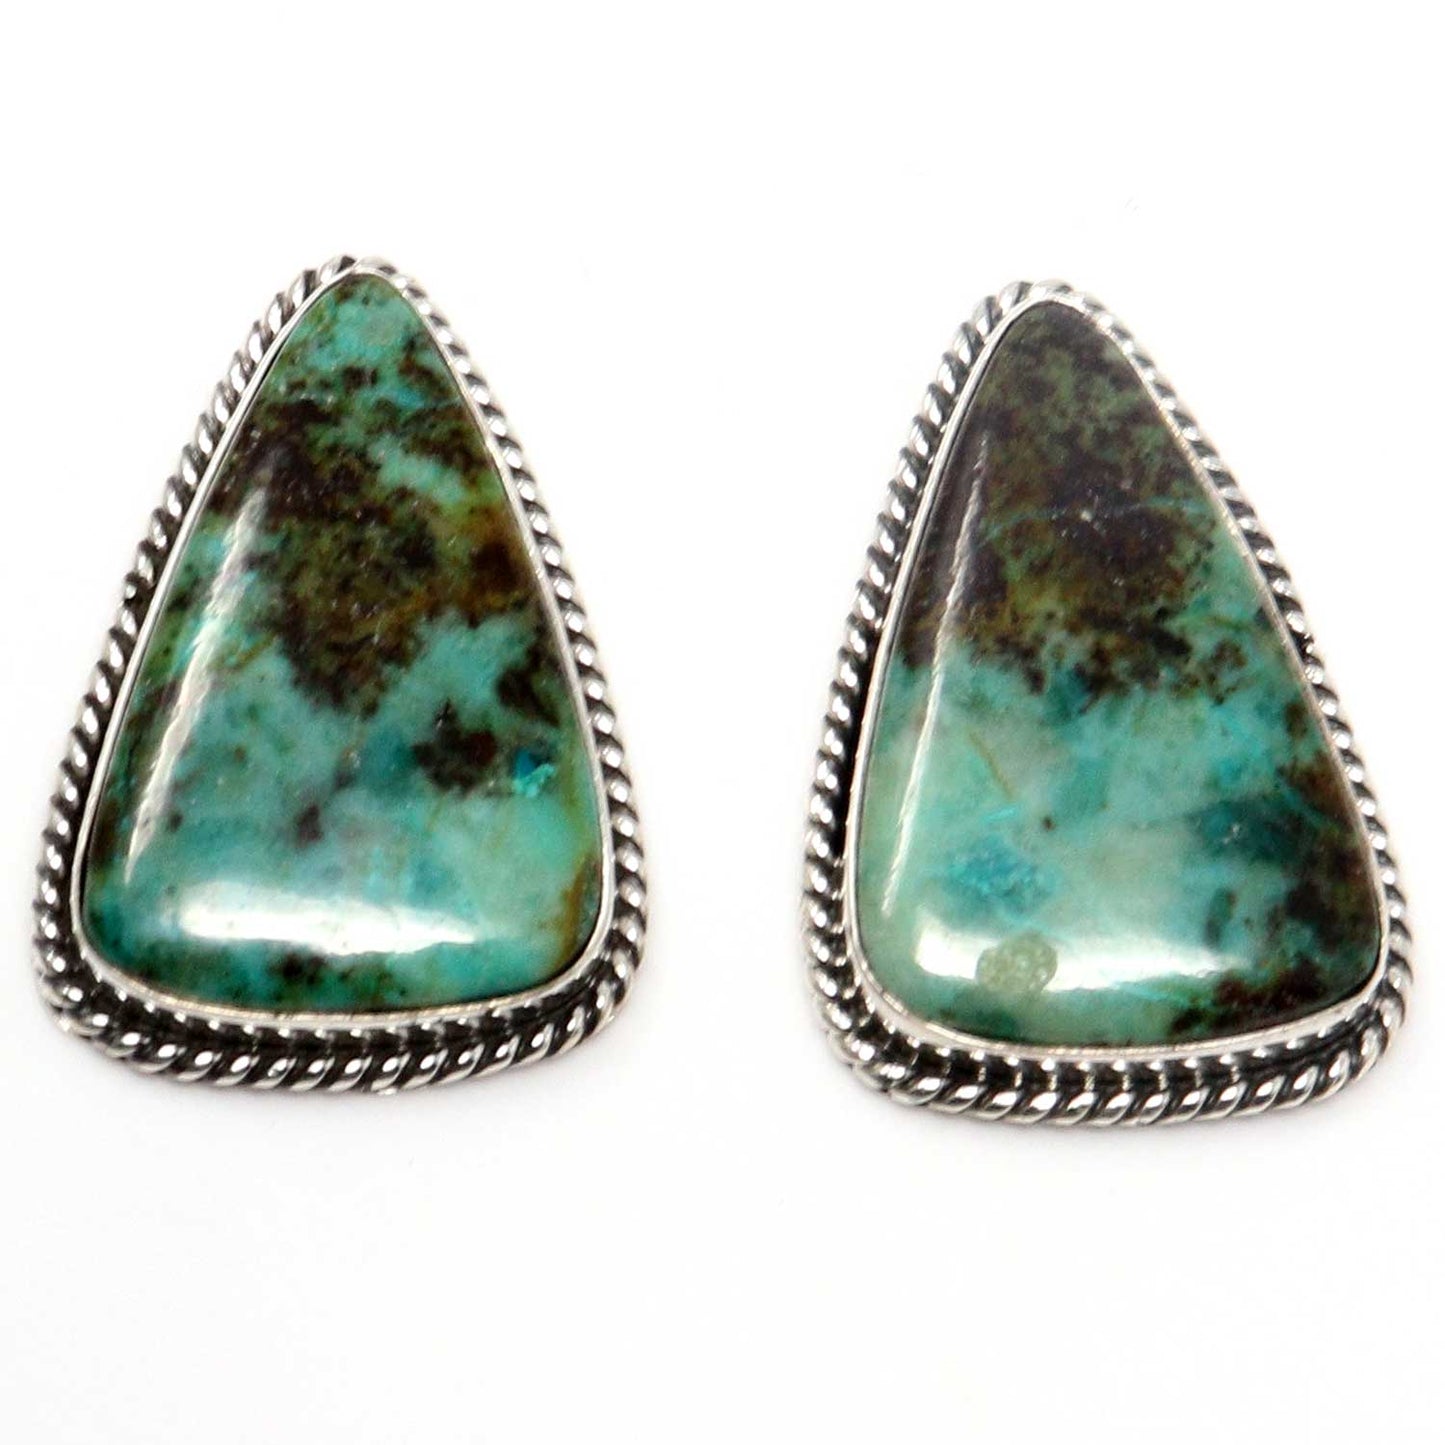 Triangular Turquoise Stud Earrings